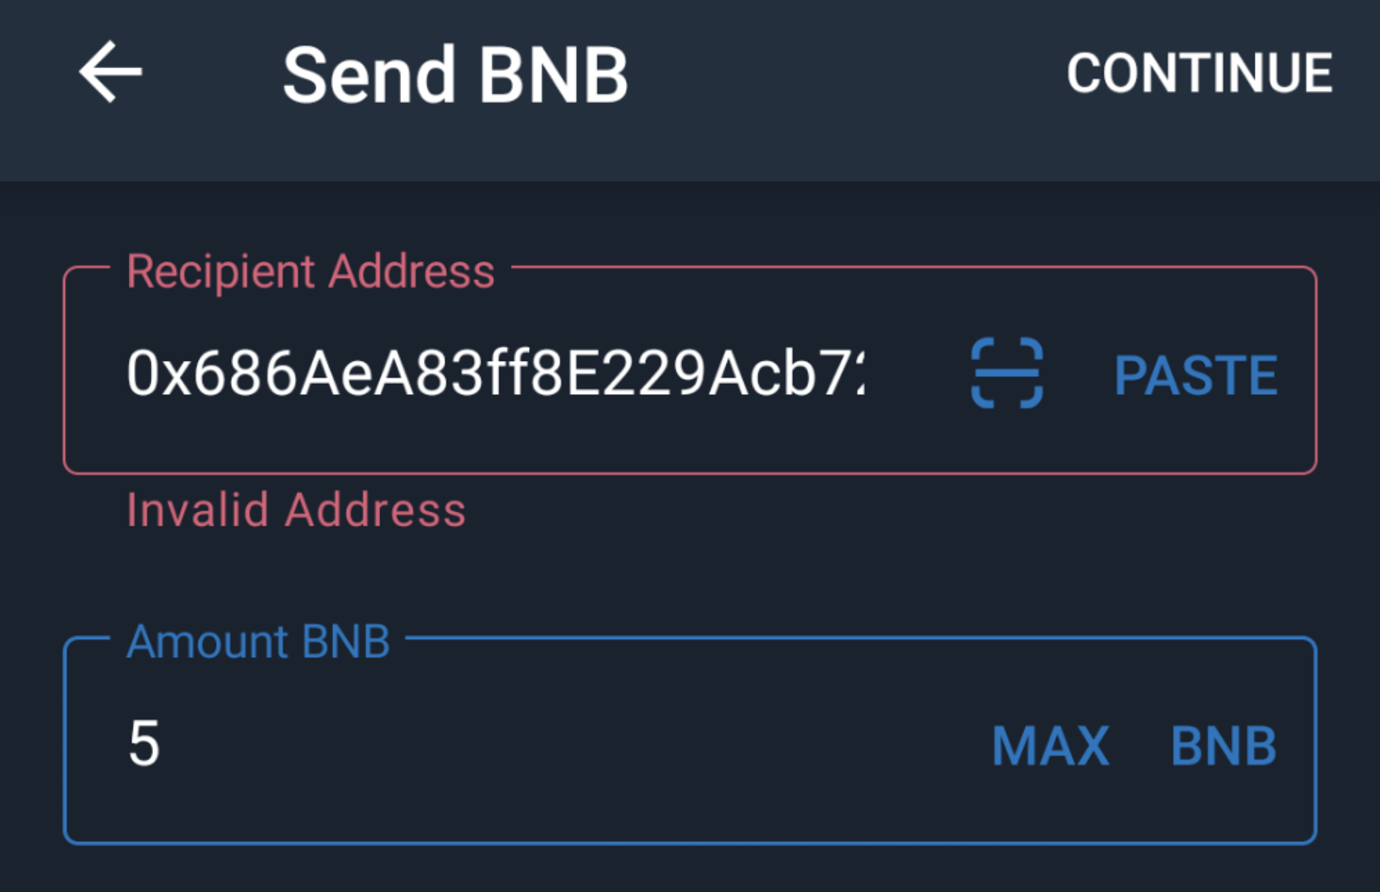 BNB to Smart Chain "invalid address" message - English ...